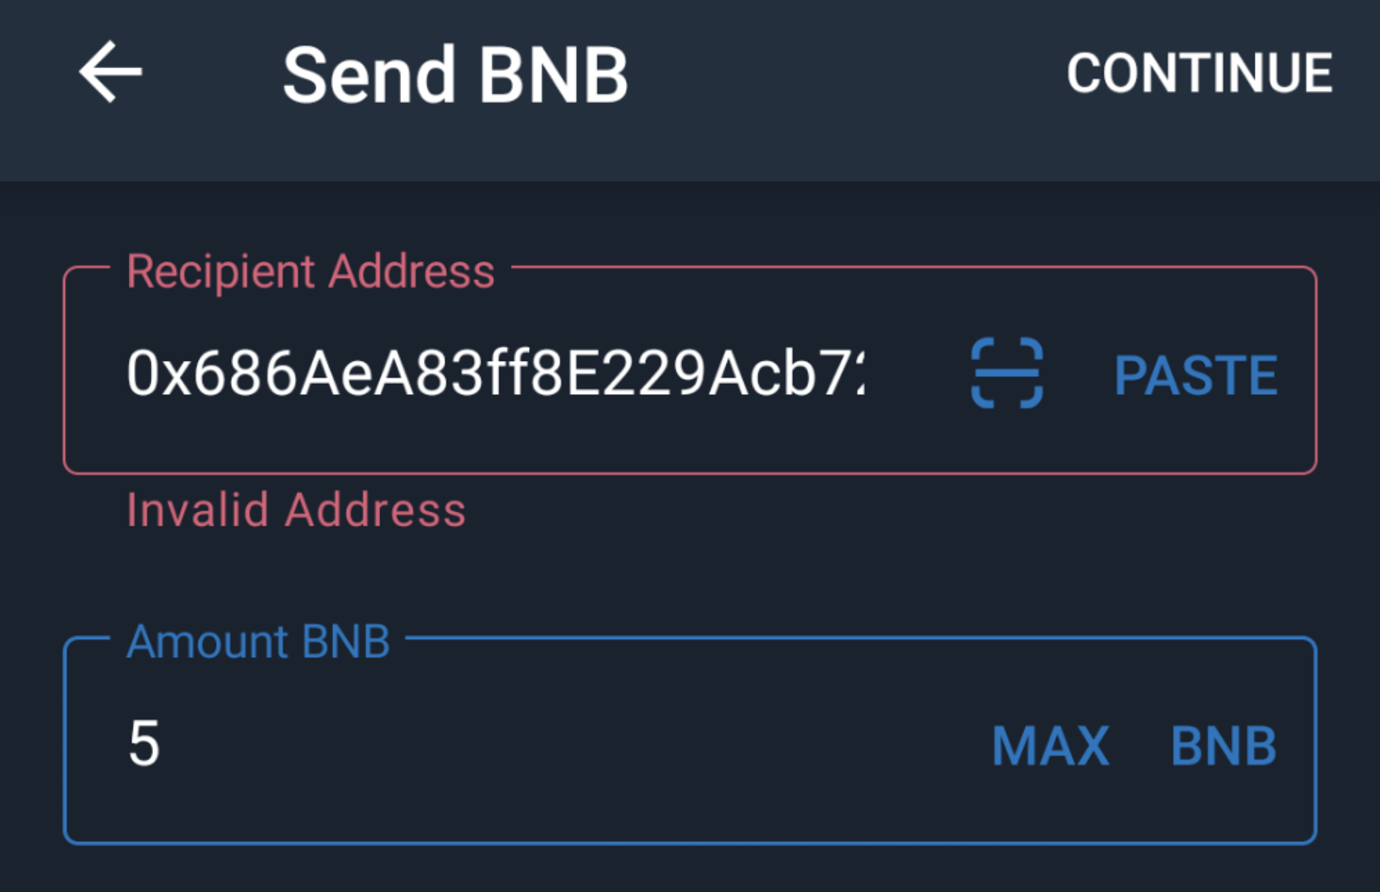 BNB to Smart Chain "invalid address" message - English ...